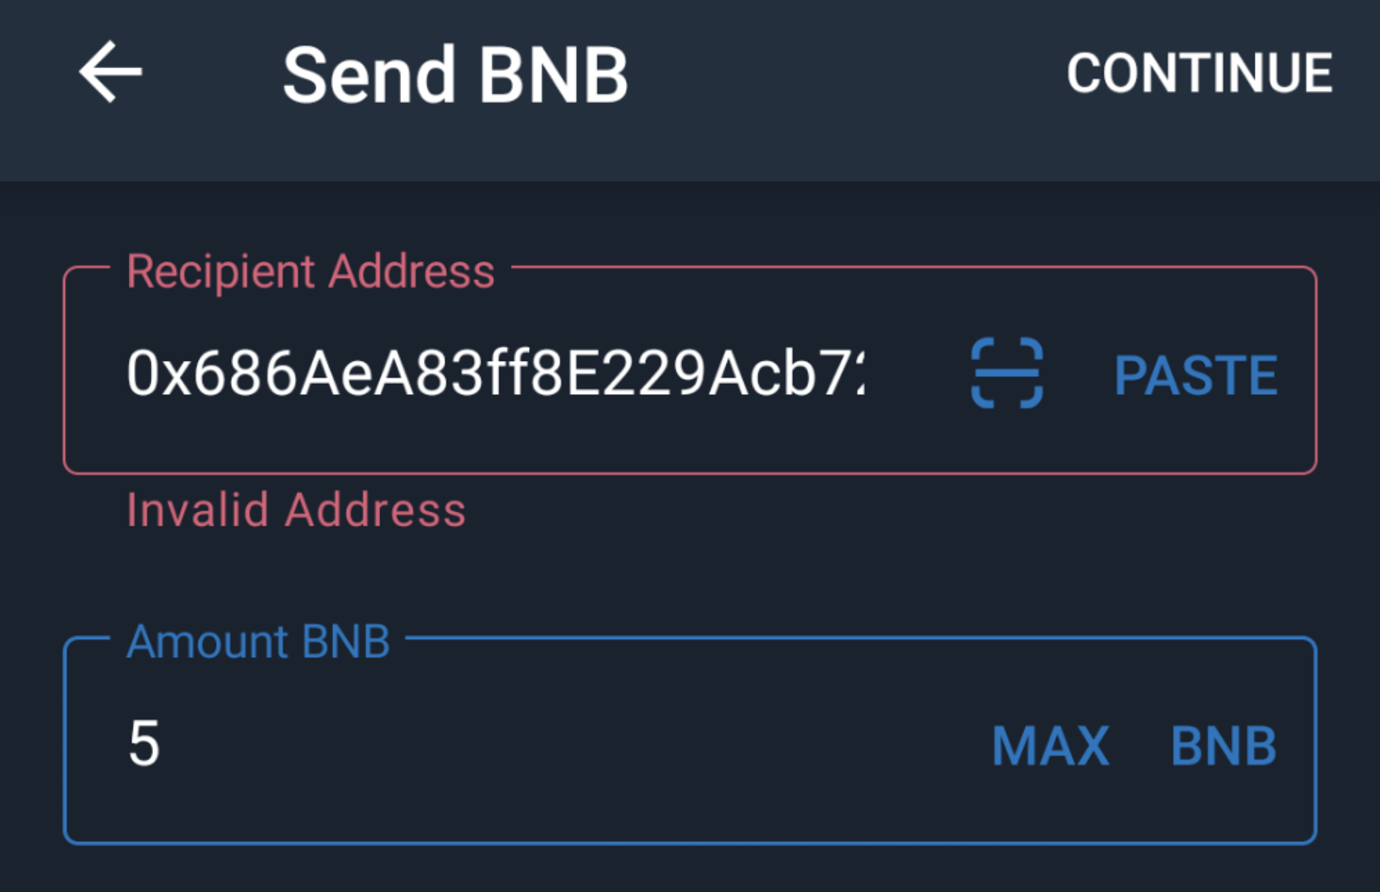 BNB to Smart Chain "invalid address" message - English ...